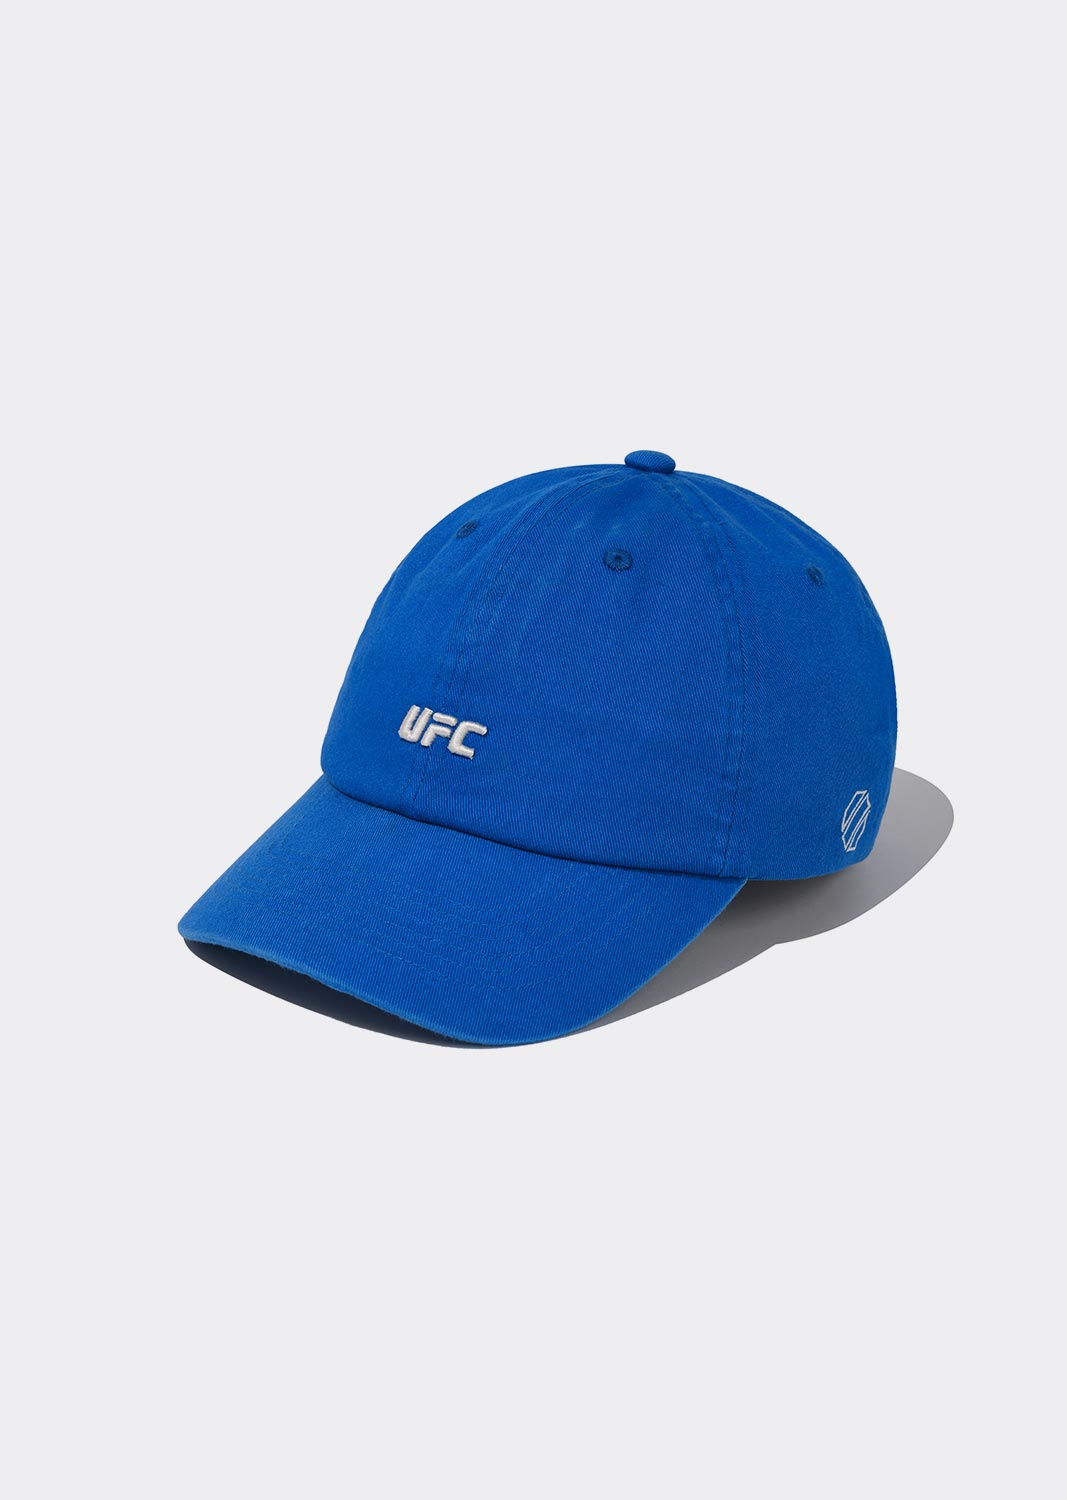 UFC 에센셜 볼캡 블루 U2HWV1320BL